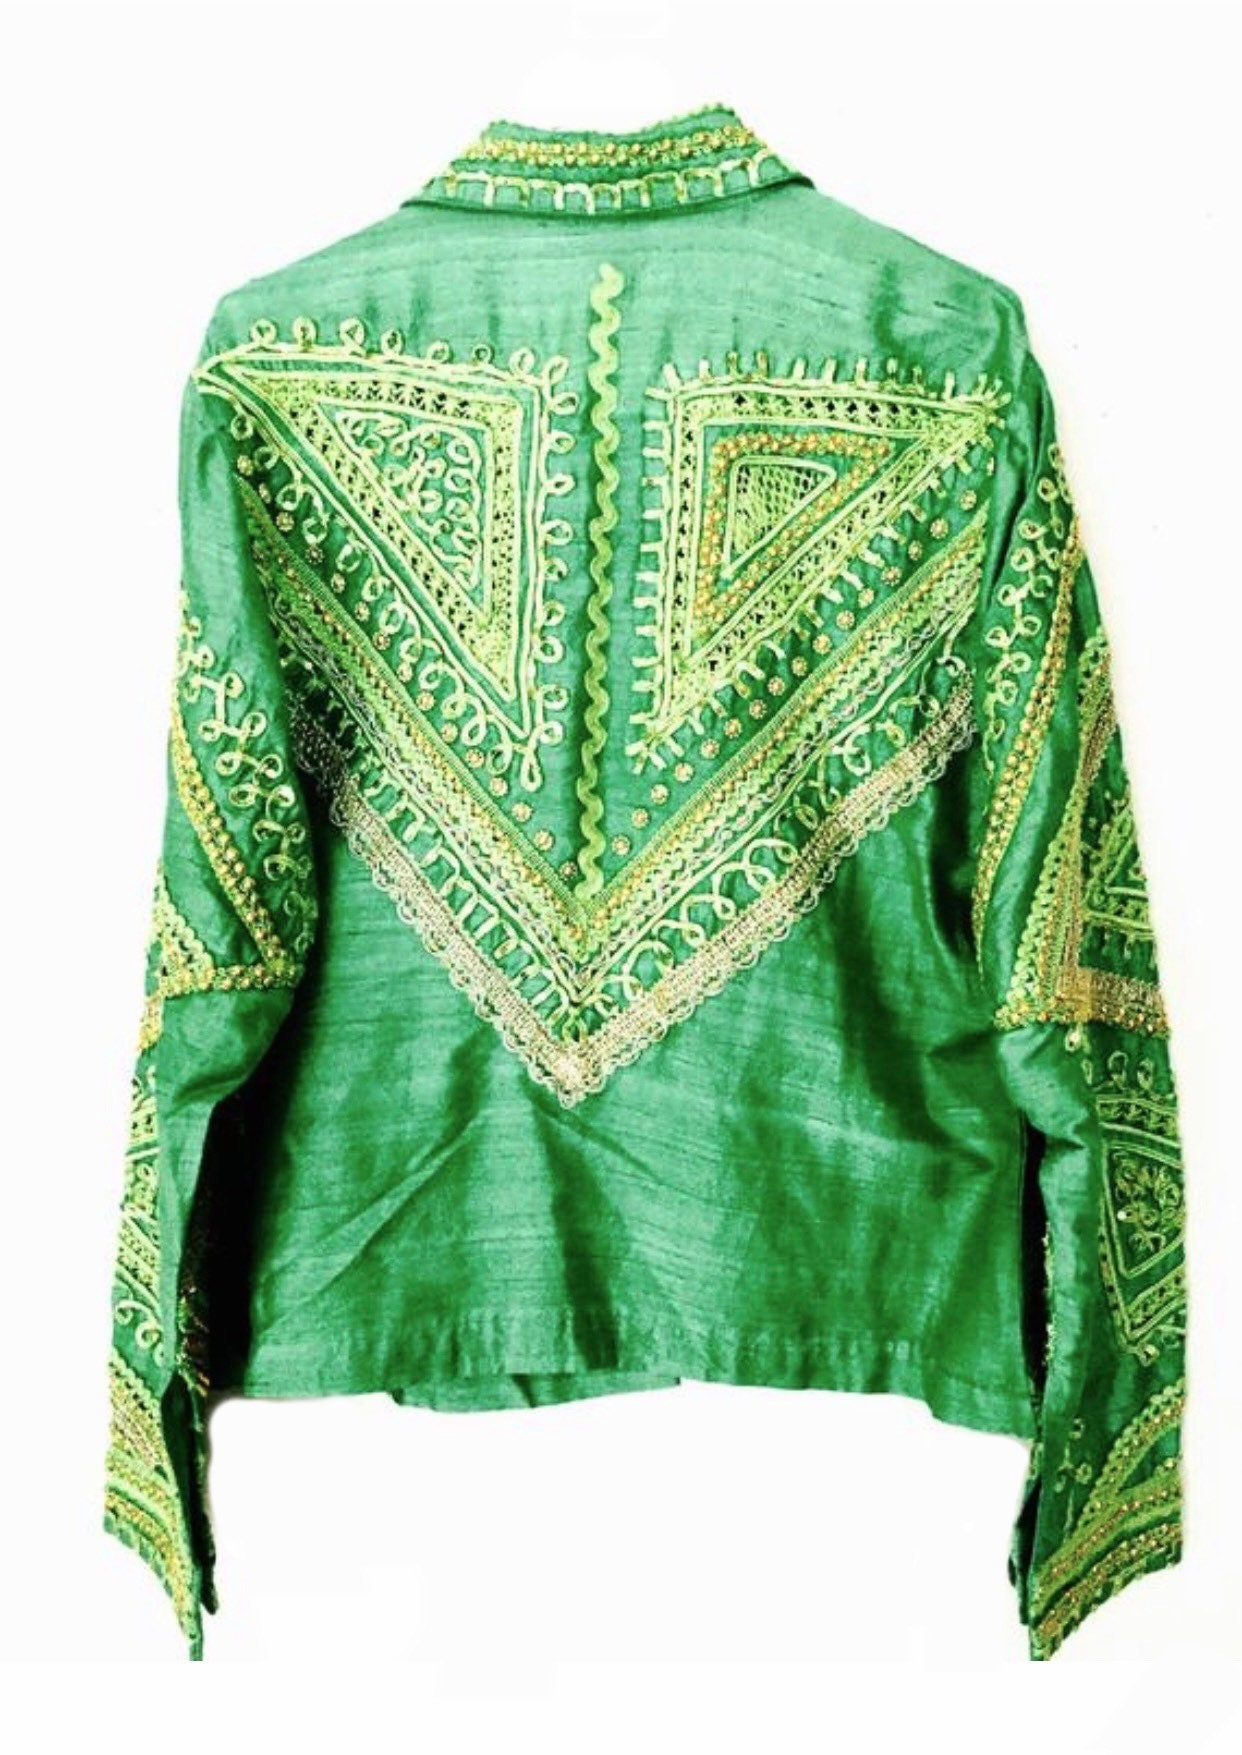 Vintage Embroidered Jacket / Sheer Silk Jacket / Green Beaded | Etsy